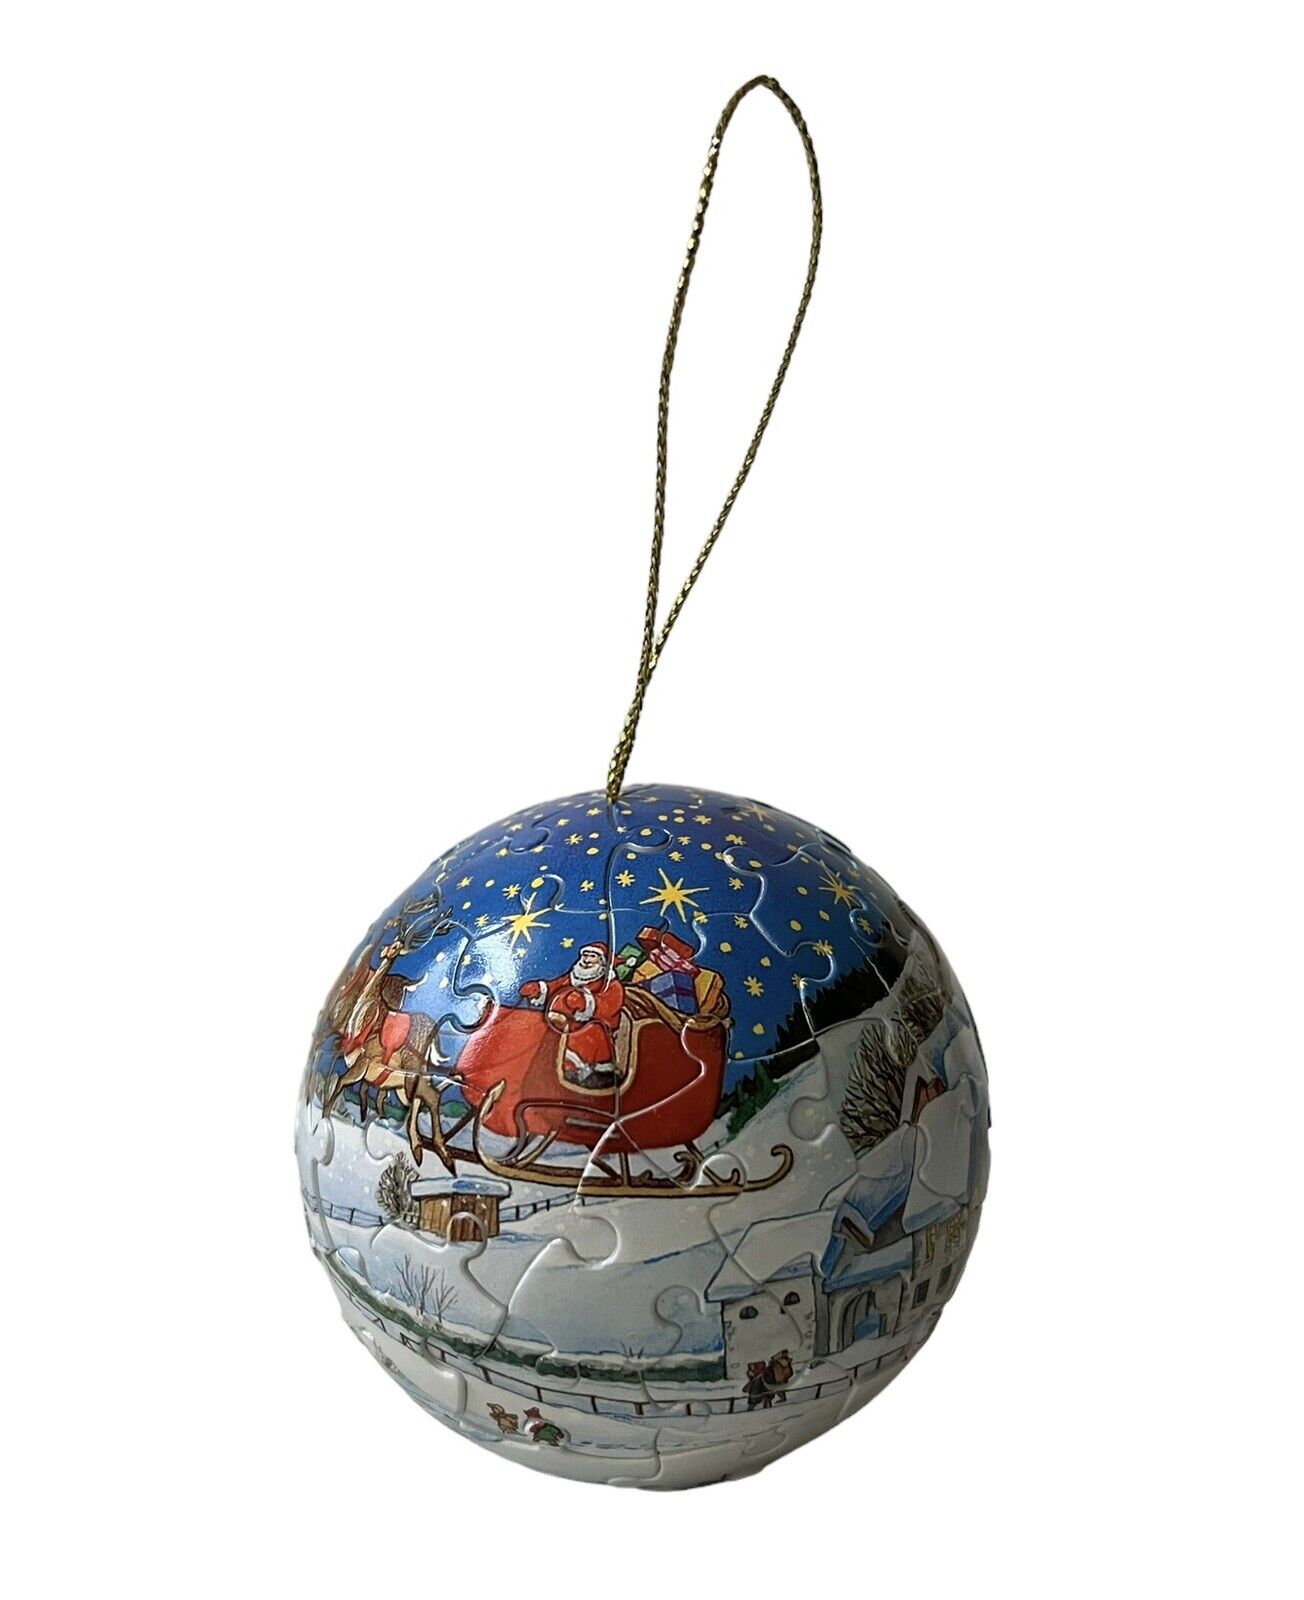 2006 Ravensburger 3D Christmas Ornament Puzzle Ball Santa Reindeer Snowy Scenery